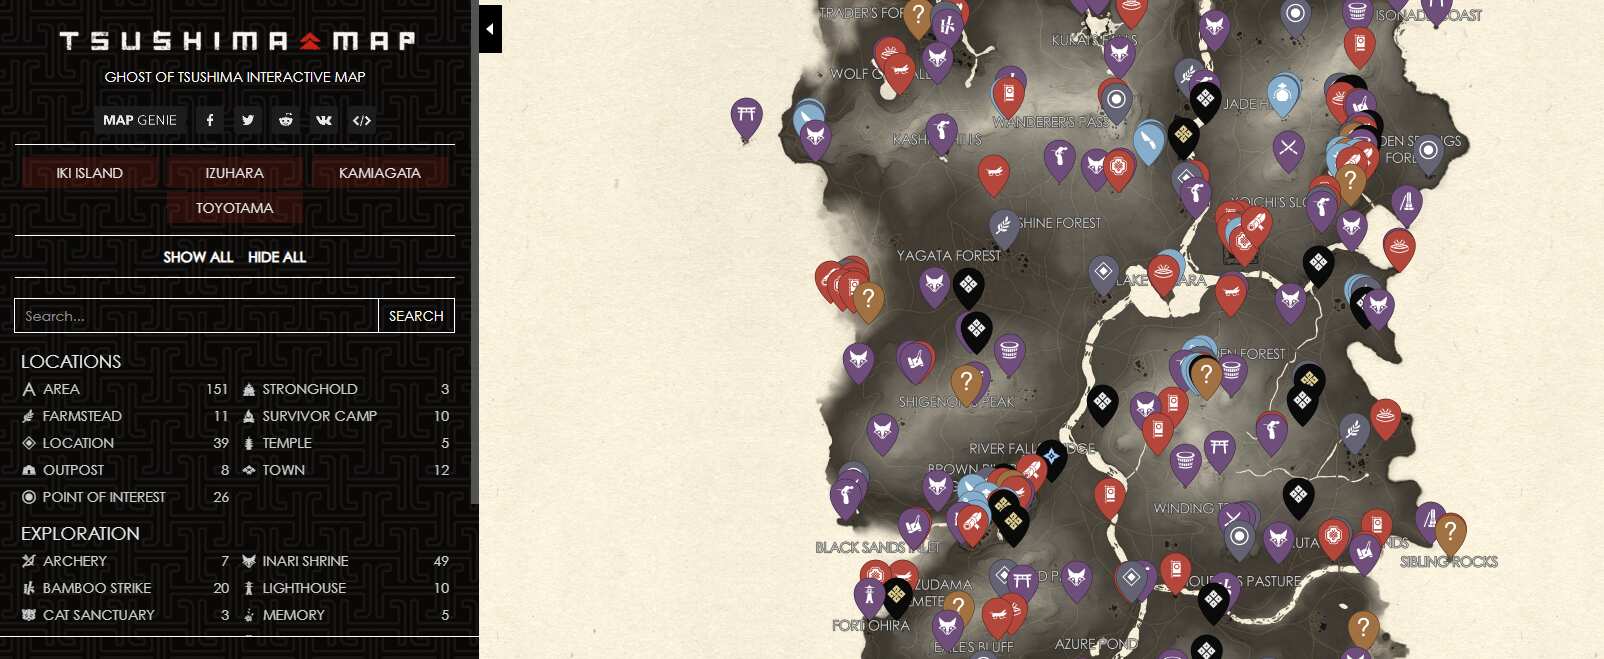 Интерактивная карта Ghost of Tsushima на ПК — все отметки